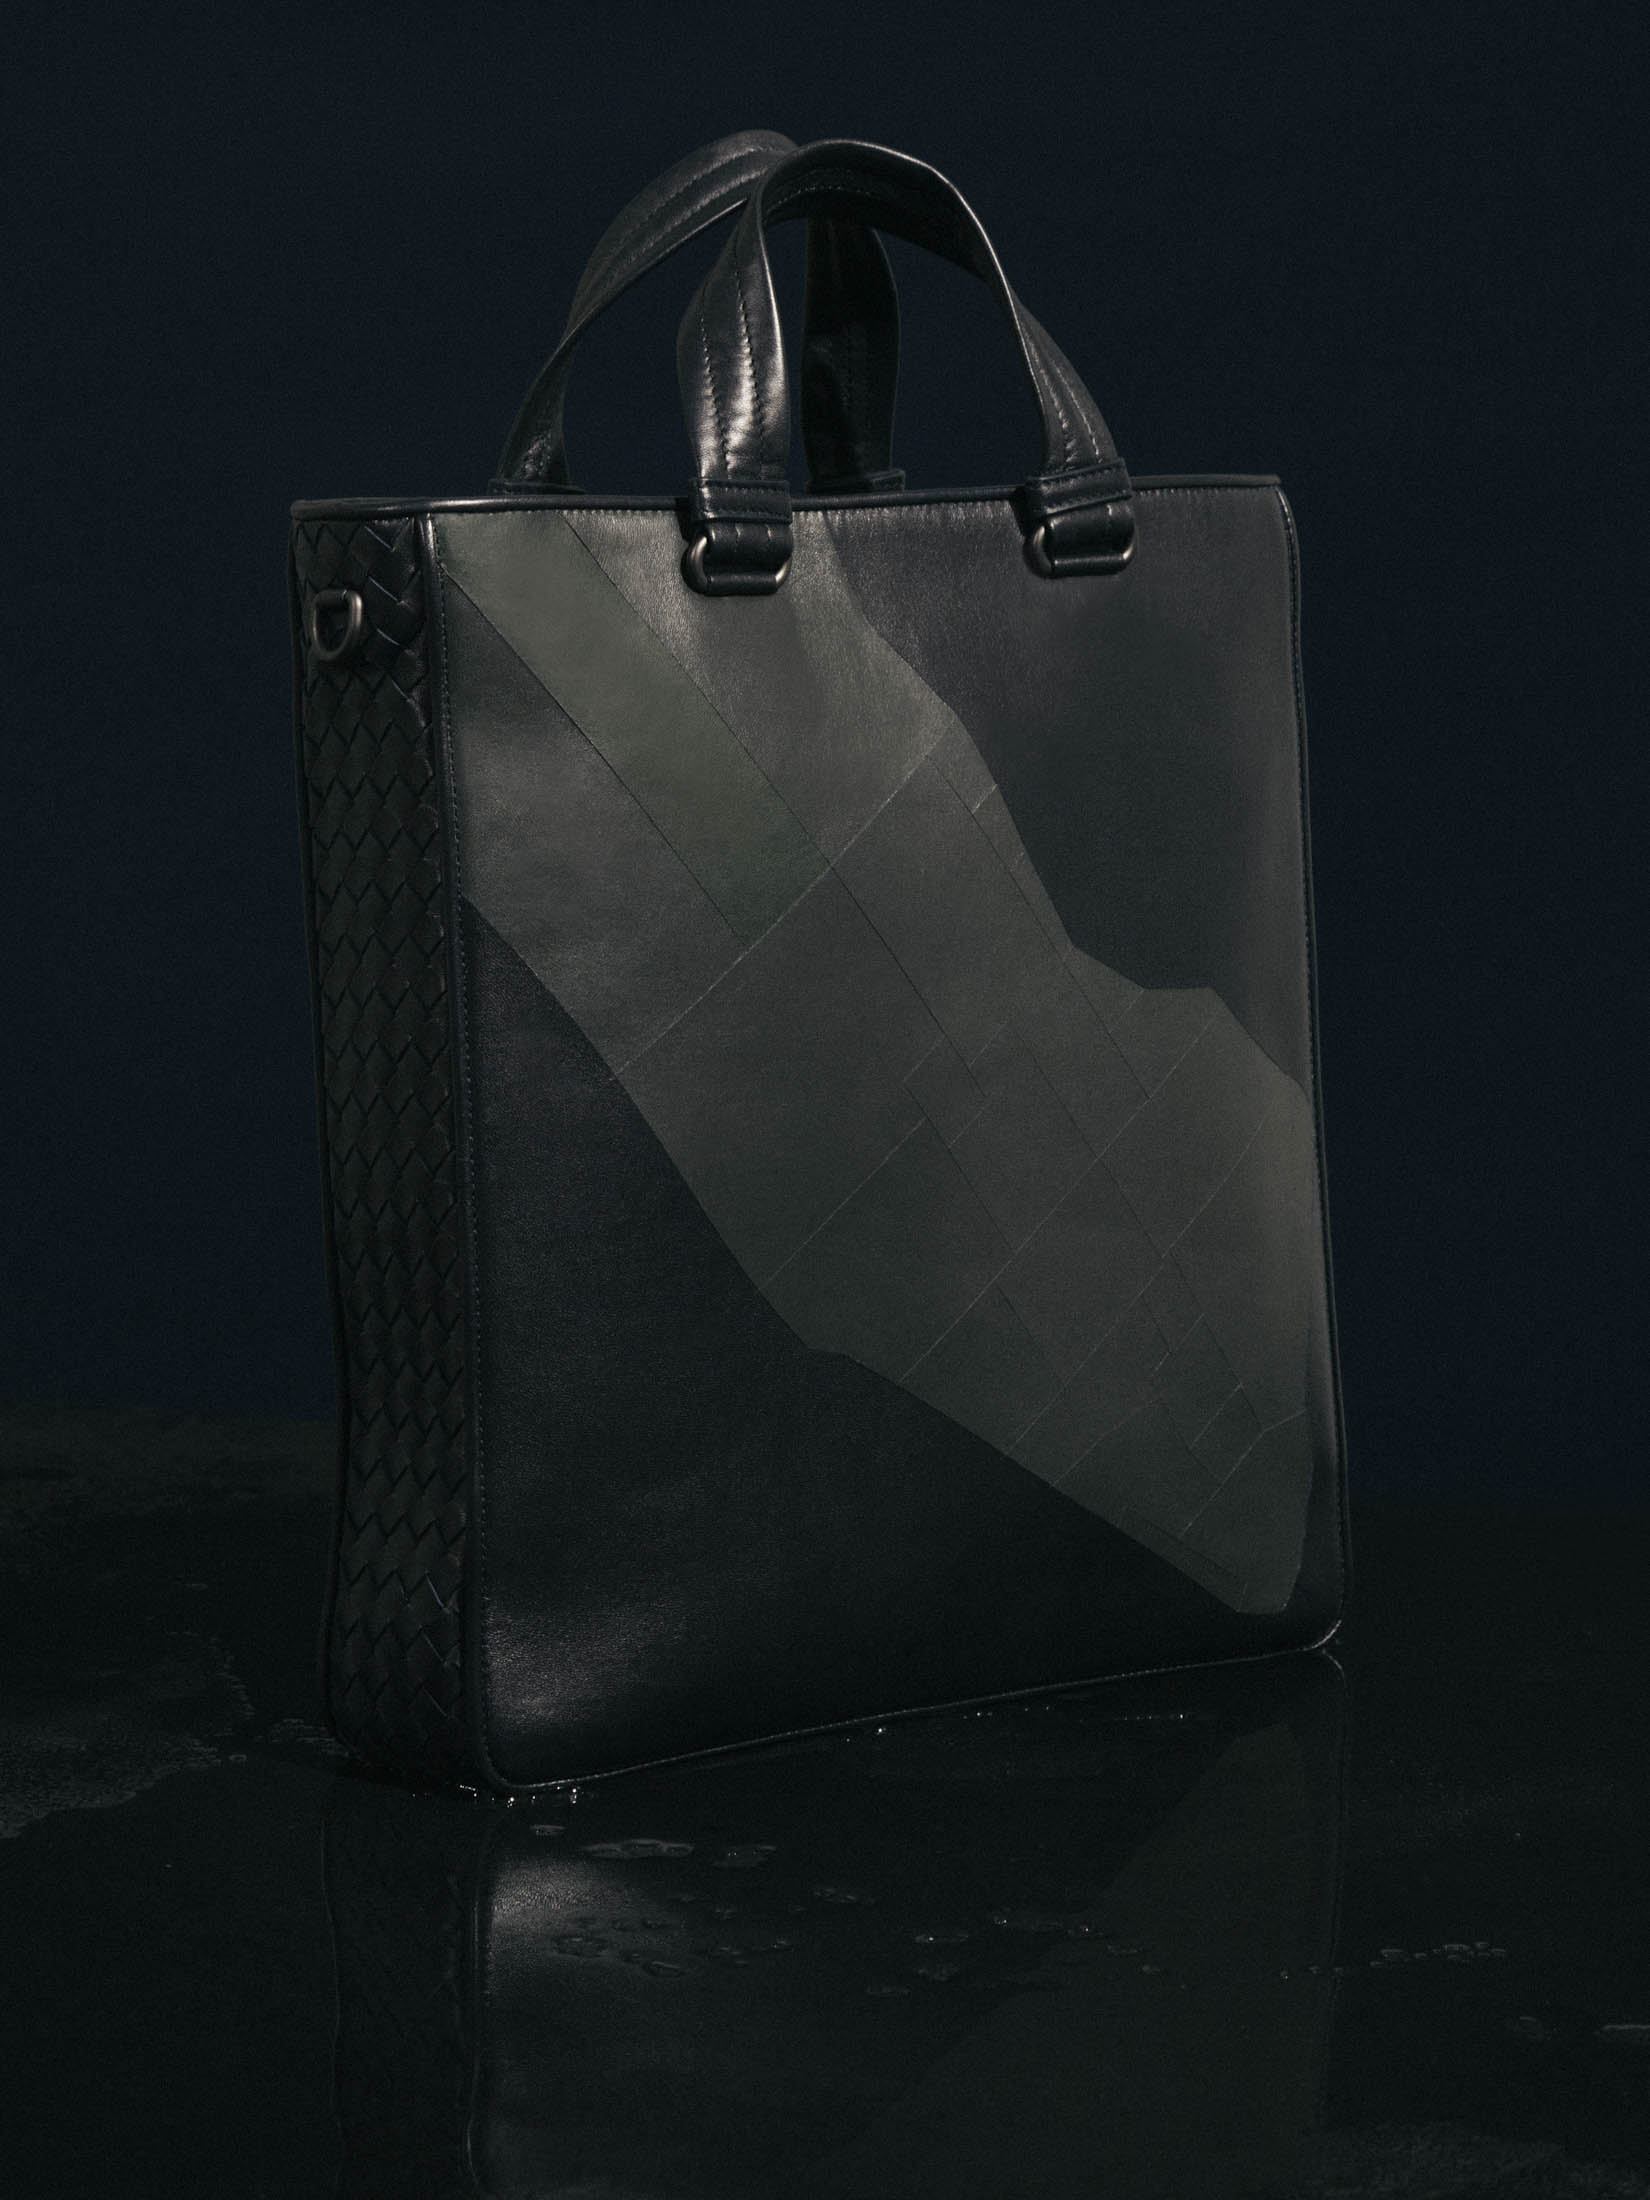 Bottega Veneta's Leather Bags Are Inspired by New York City – Robb Report